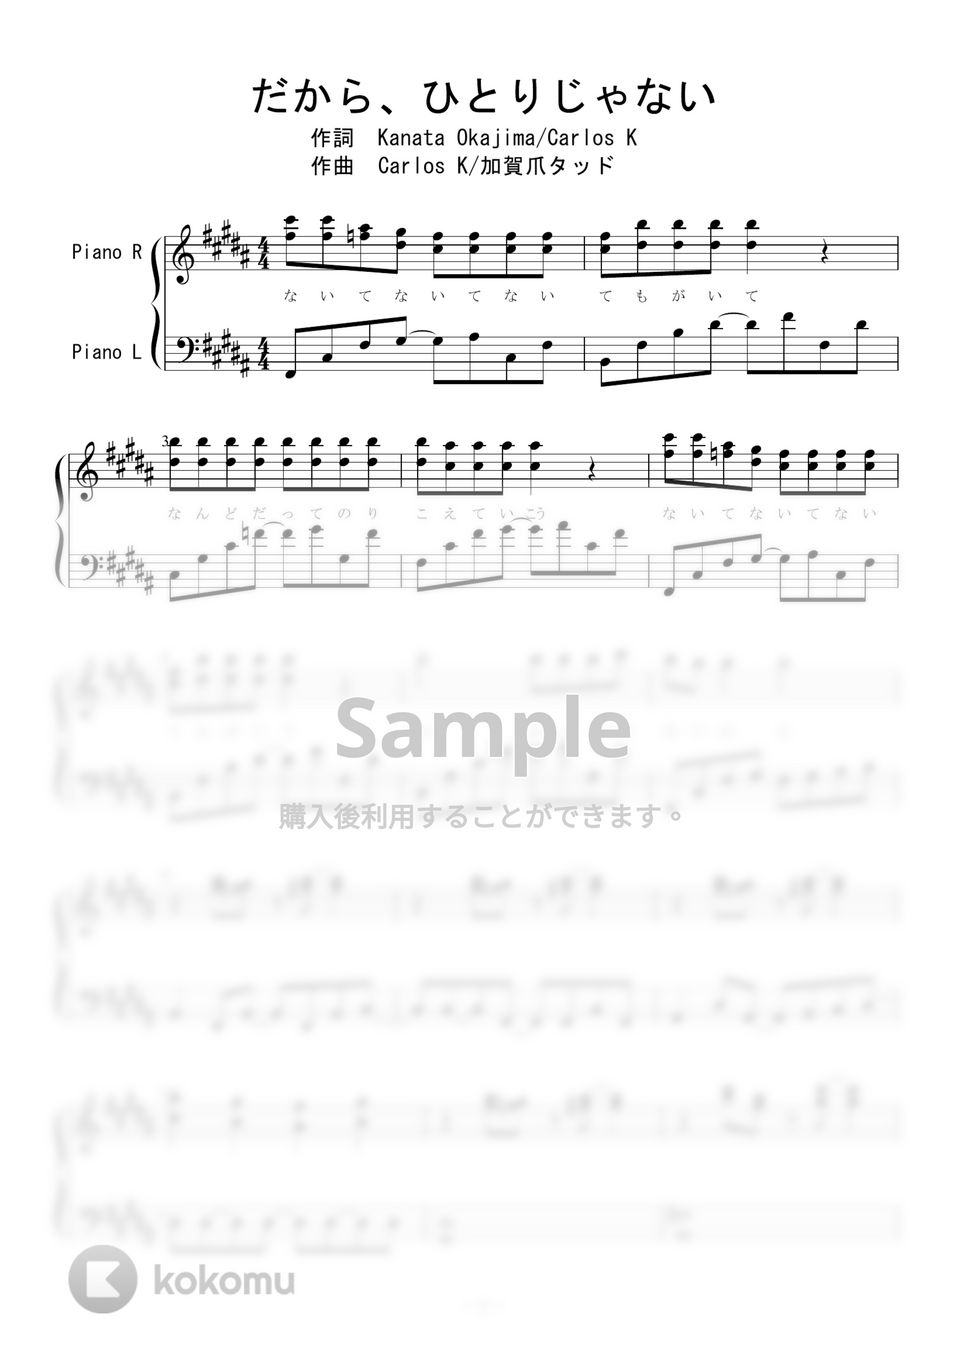 Little Glee Monster - だから、ひとりじゃない (ピアノソロ) by 二次元楽譜製作所